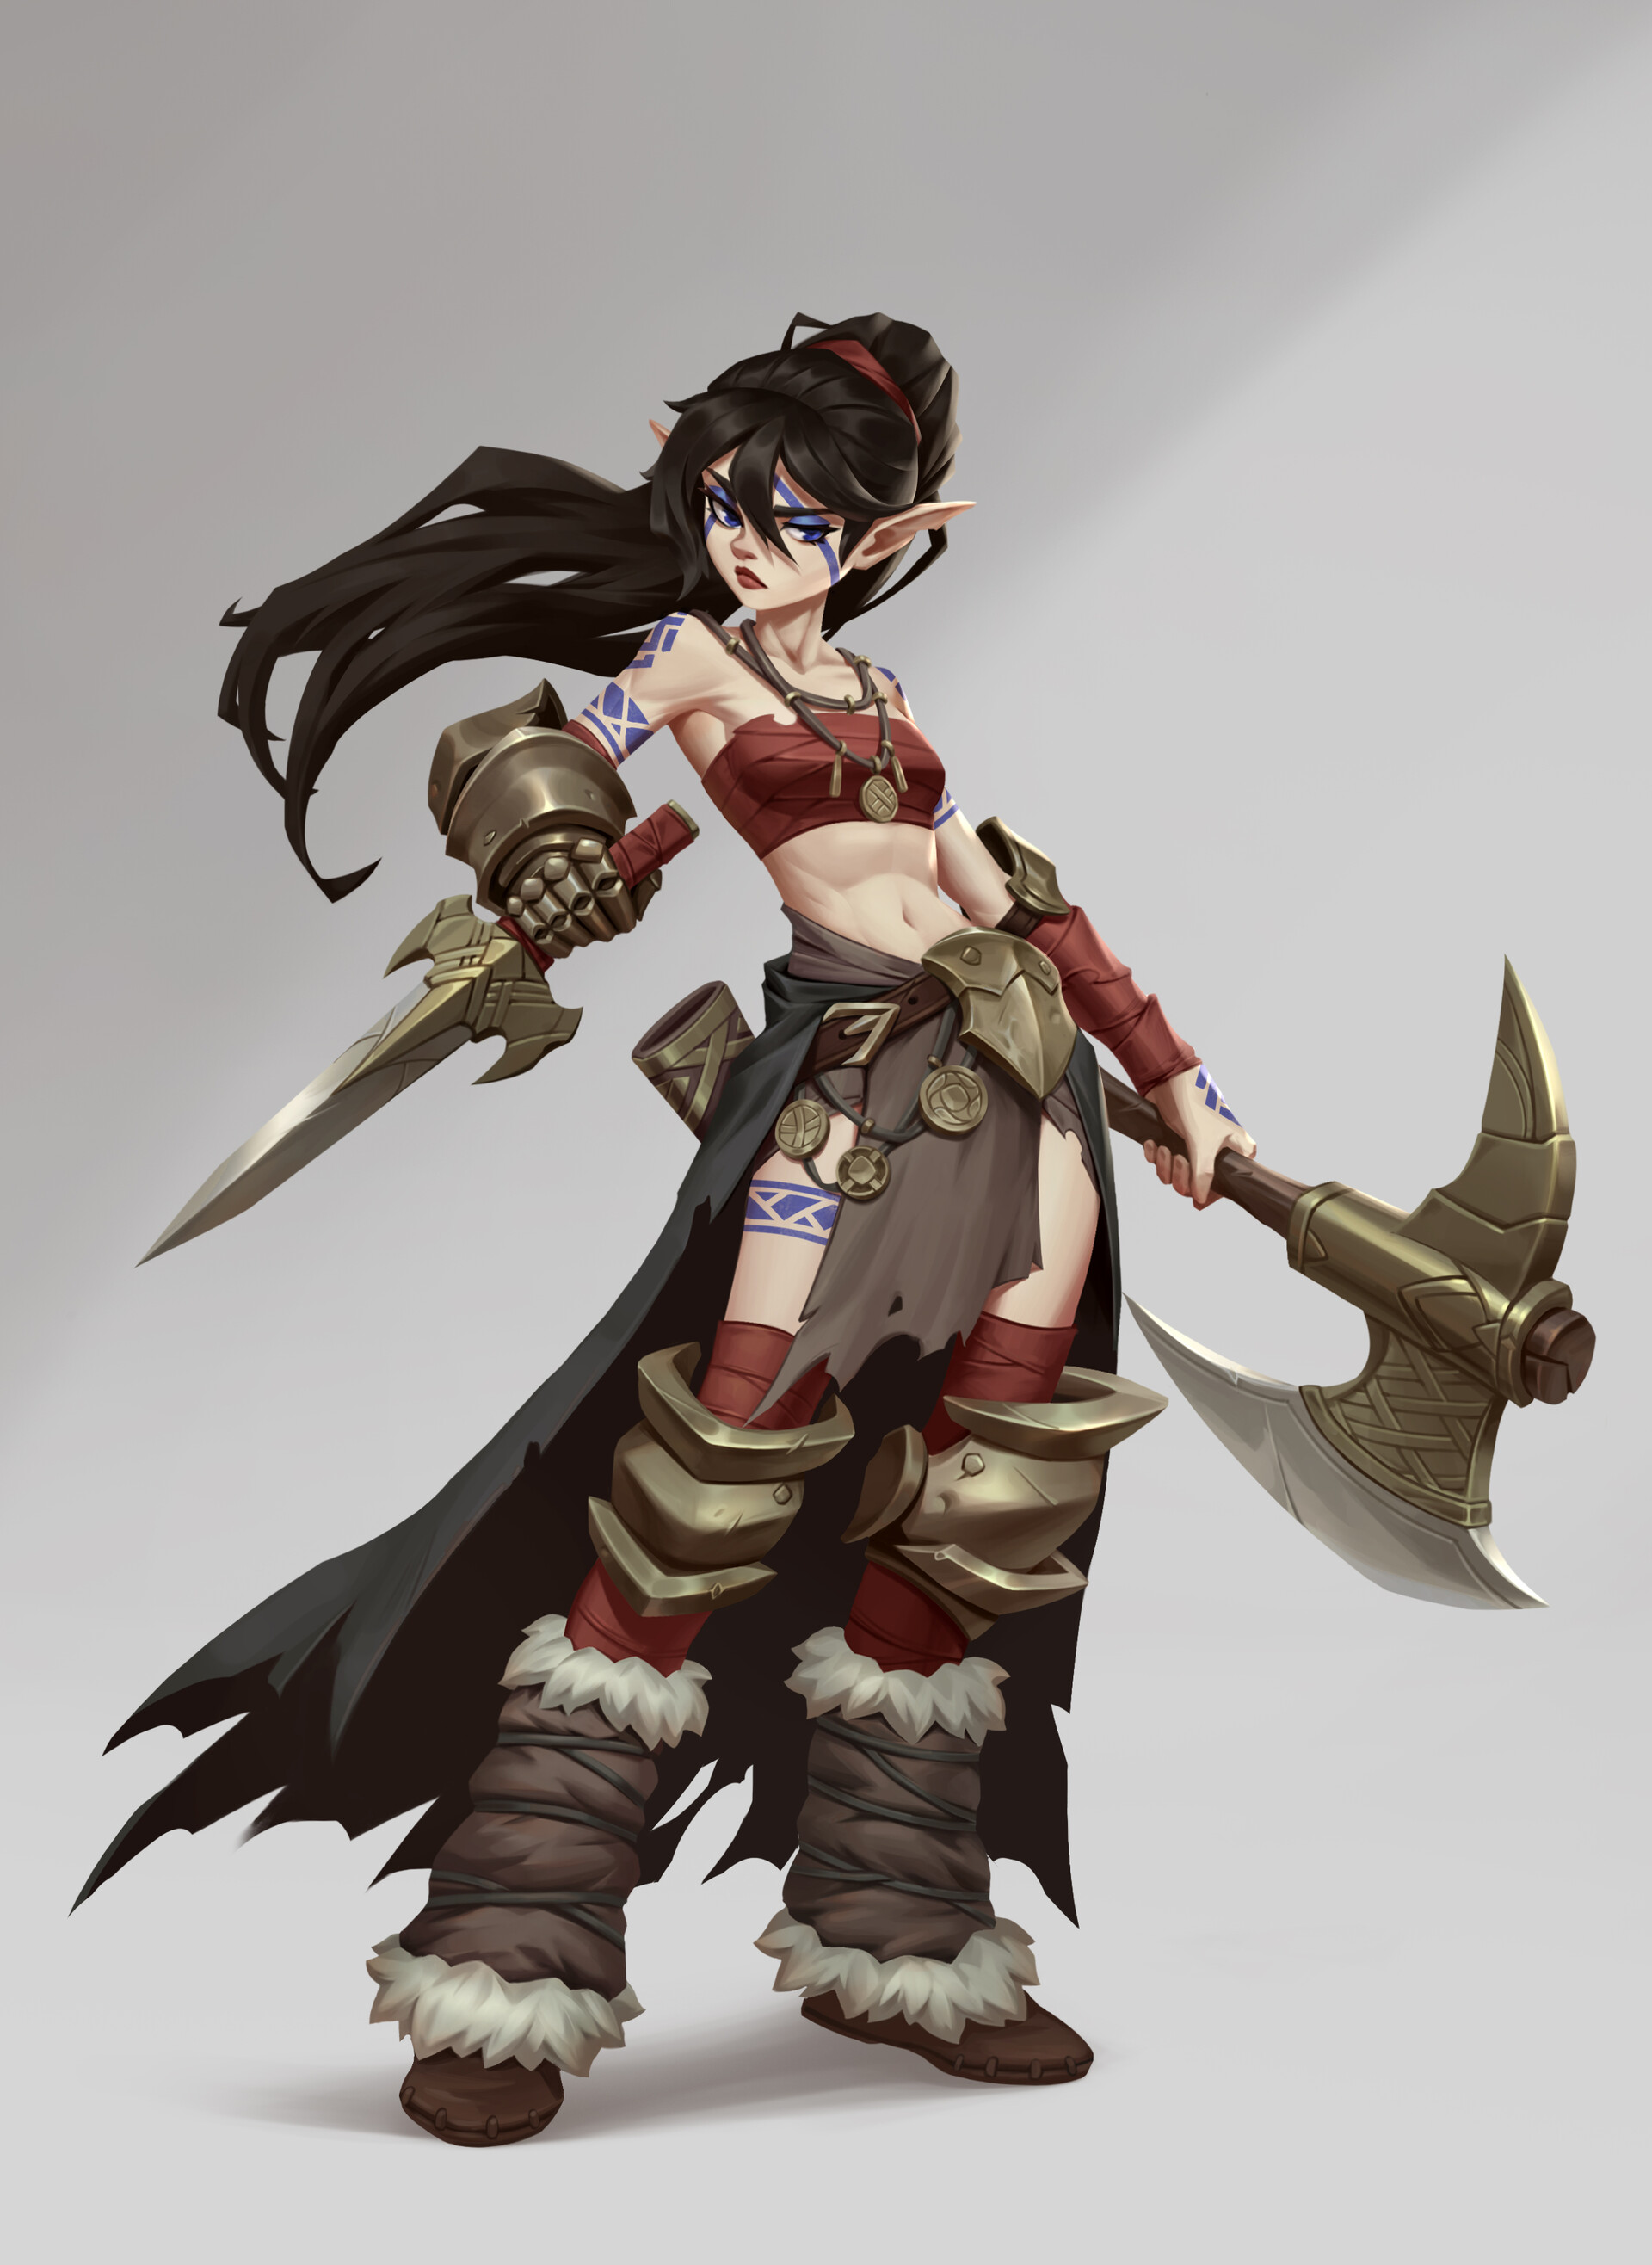 General 1920x2632 artwork women axes girls with guns pointy ears dark hair long hair gray background standing dagger